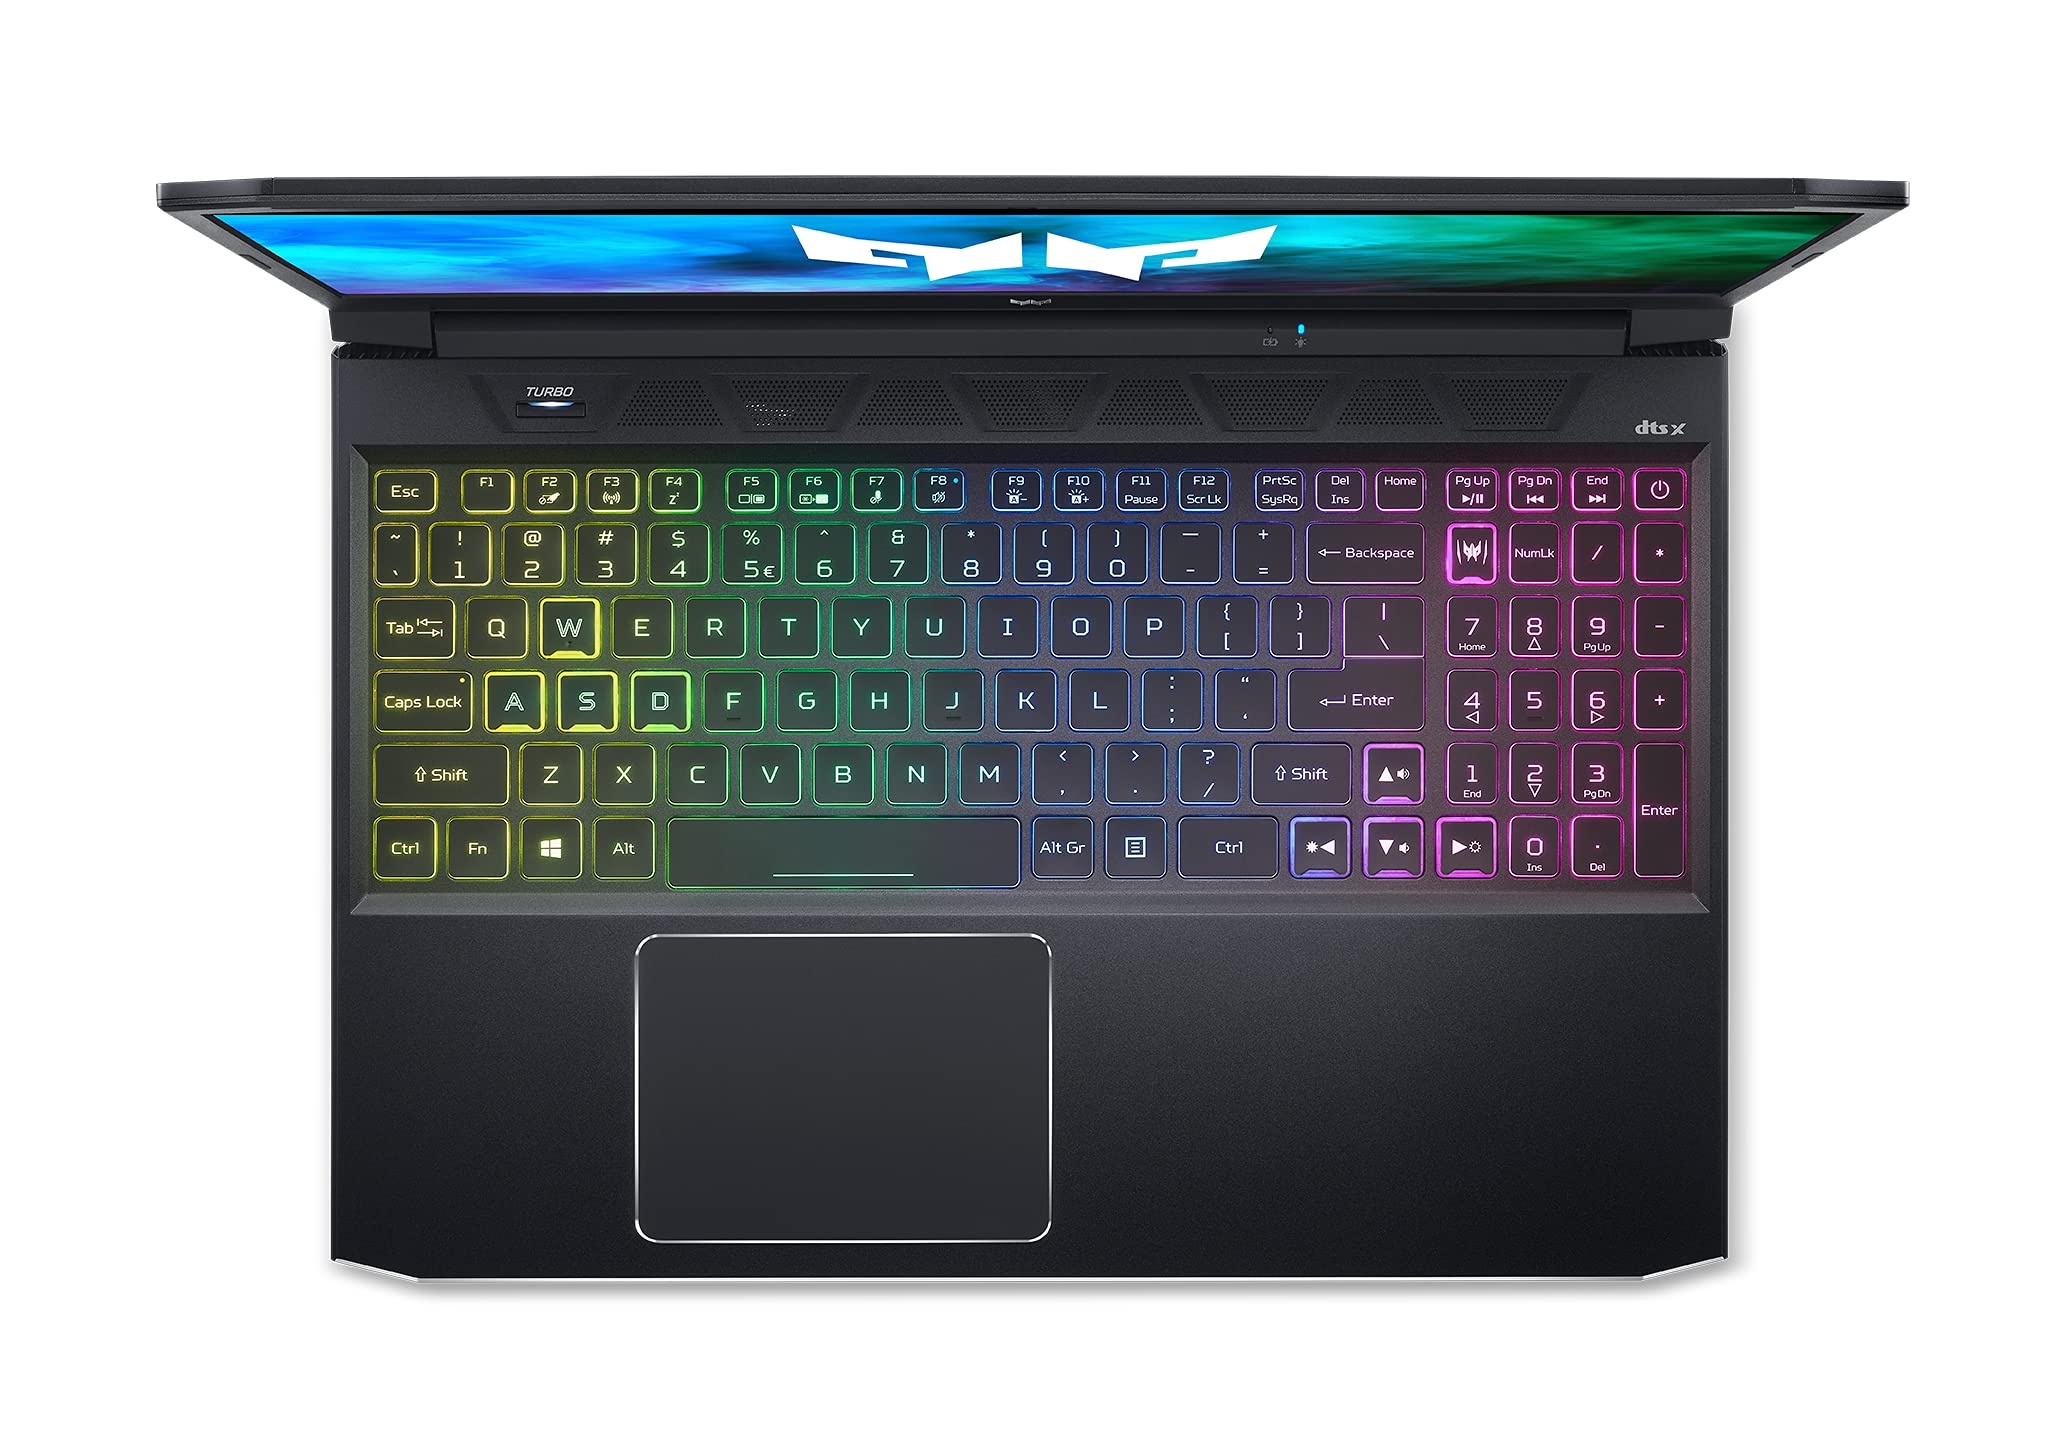 Acer Predator Helios 300 PH315-54-760S Gaming Laptop | Intel i7-11800H | NVIDIA GeForce RTX 3060 GPU | 15.6